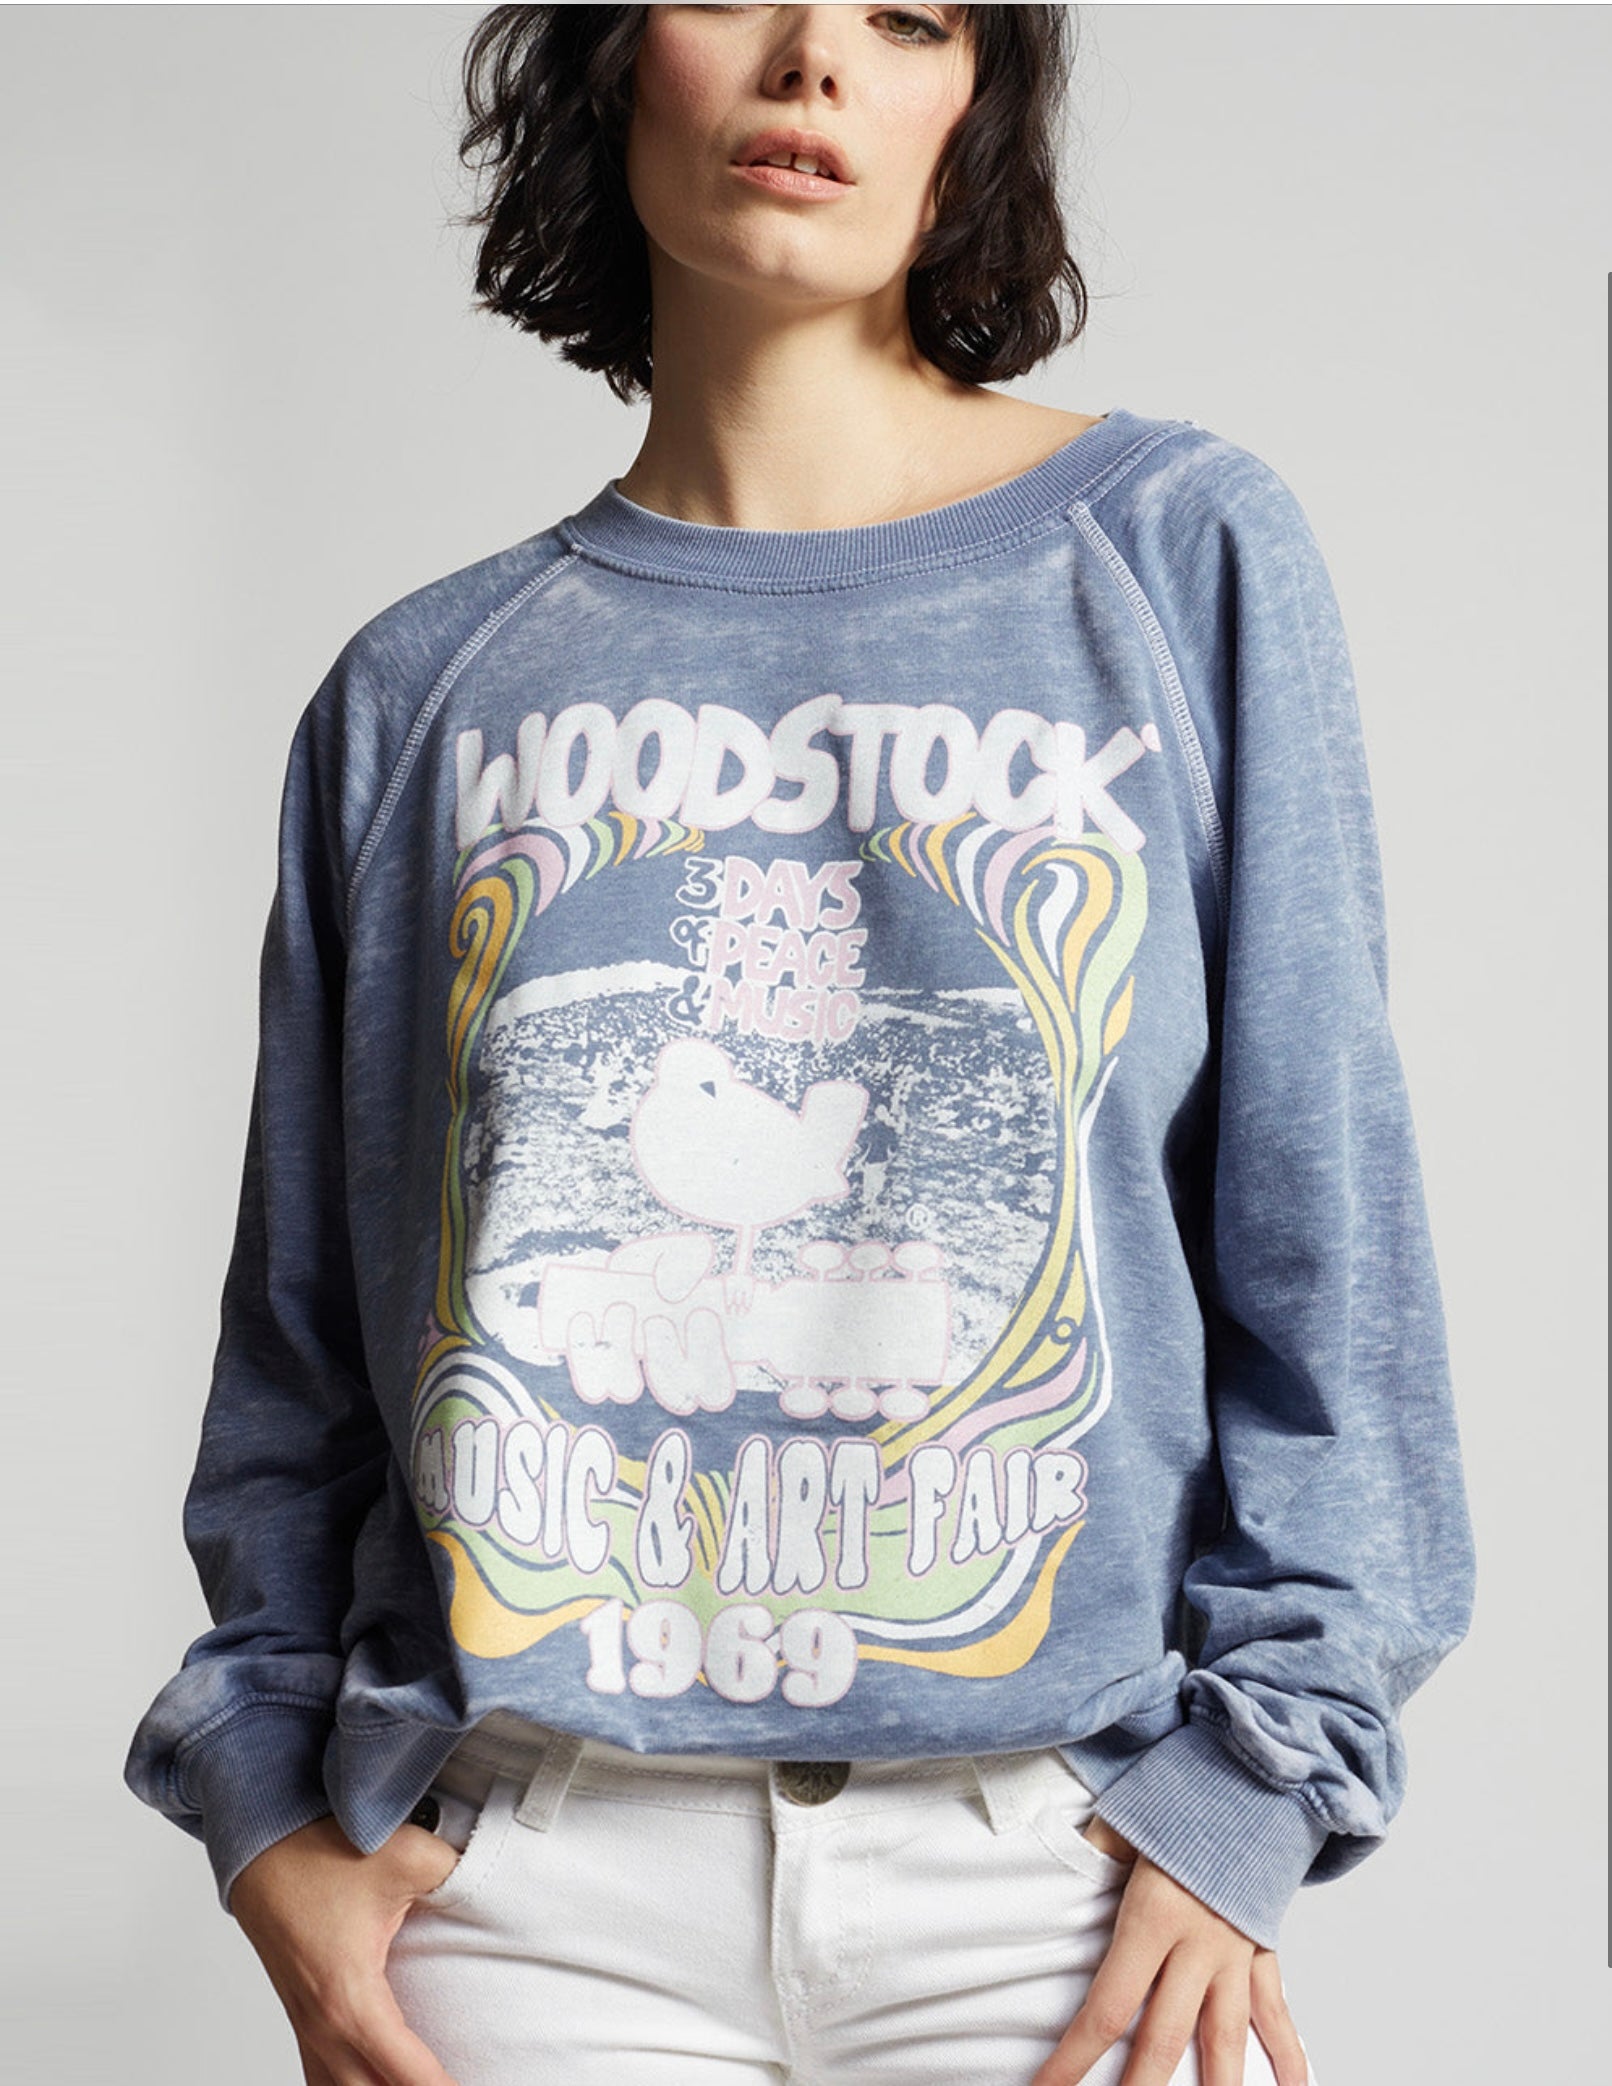  Woodstock Sweatshirt by Recycled Karma at Dilaru Boutique Nutley NJ